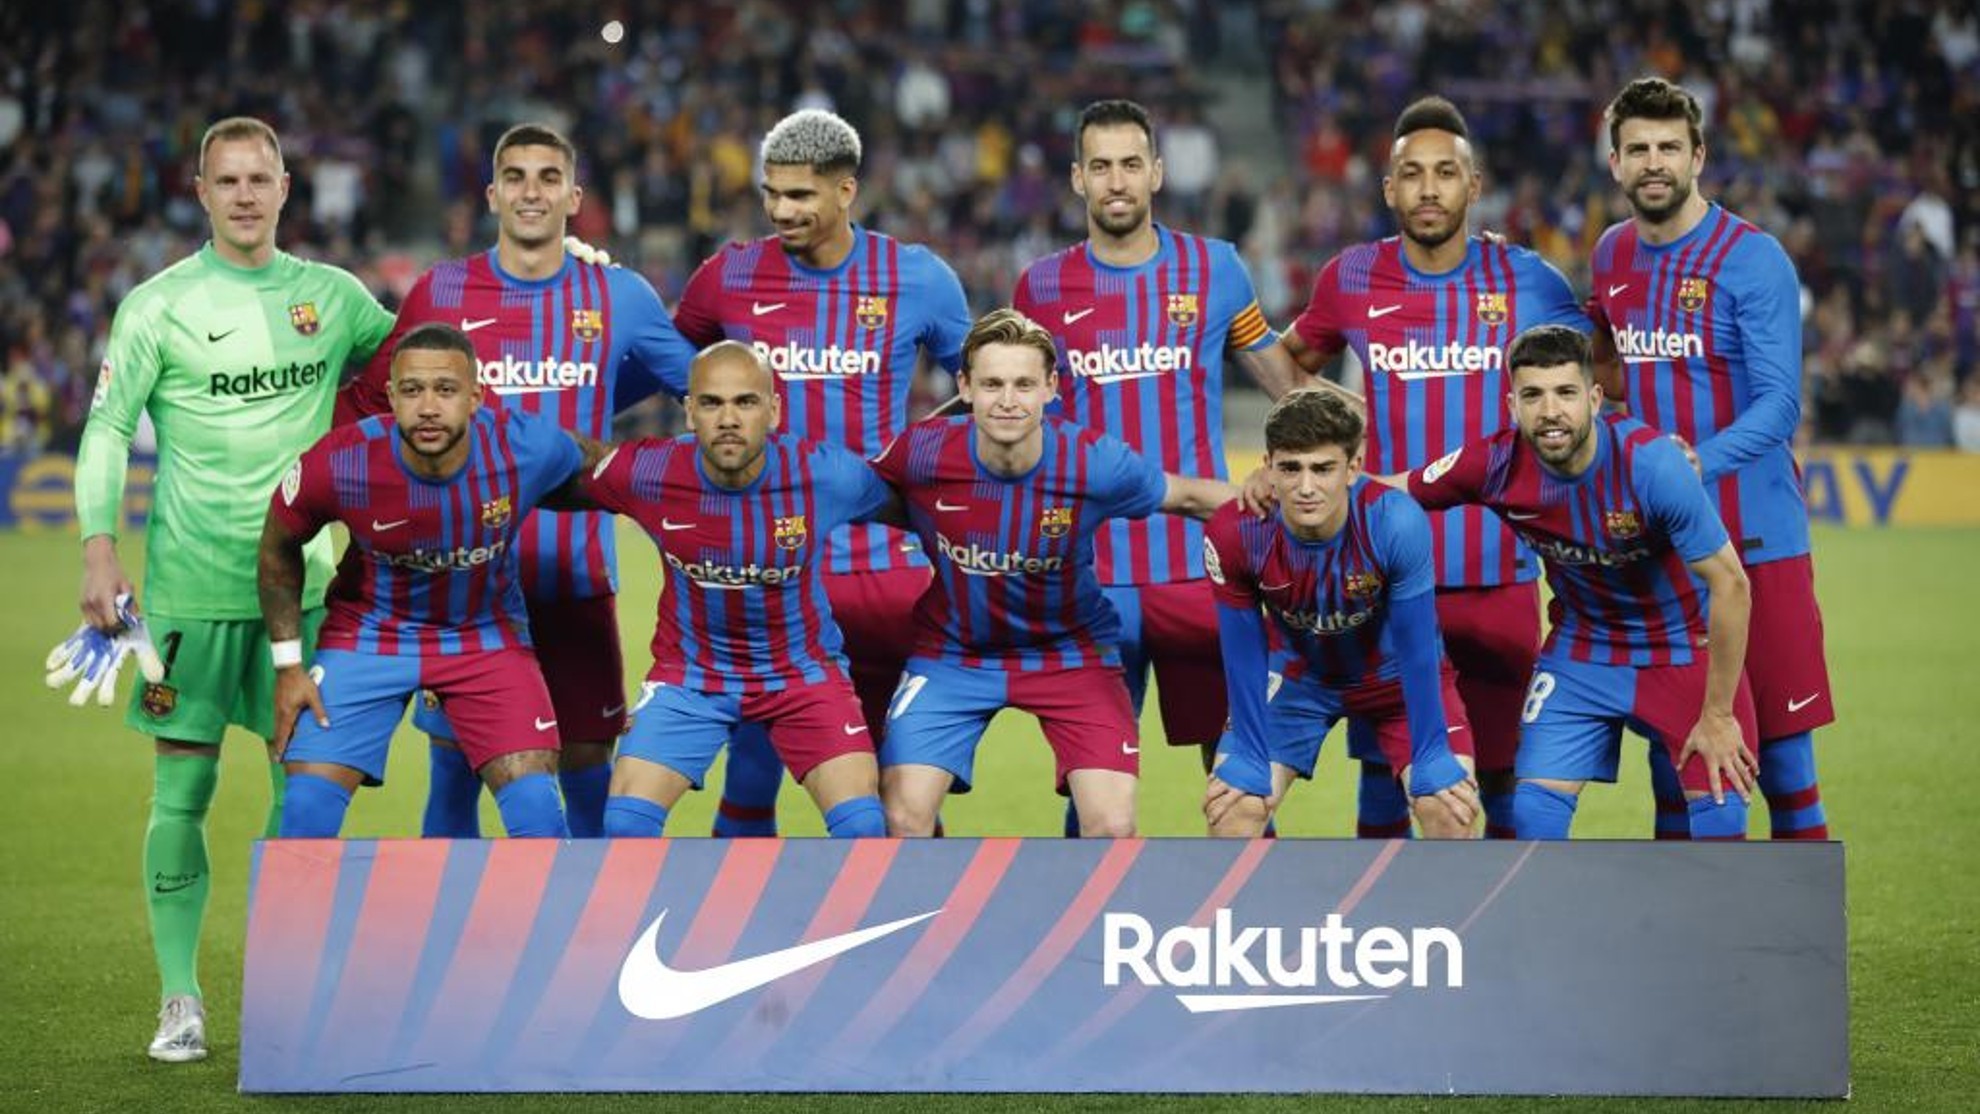 Barcelona players